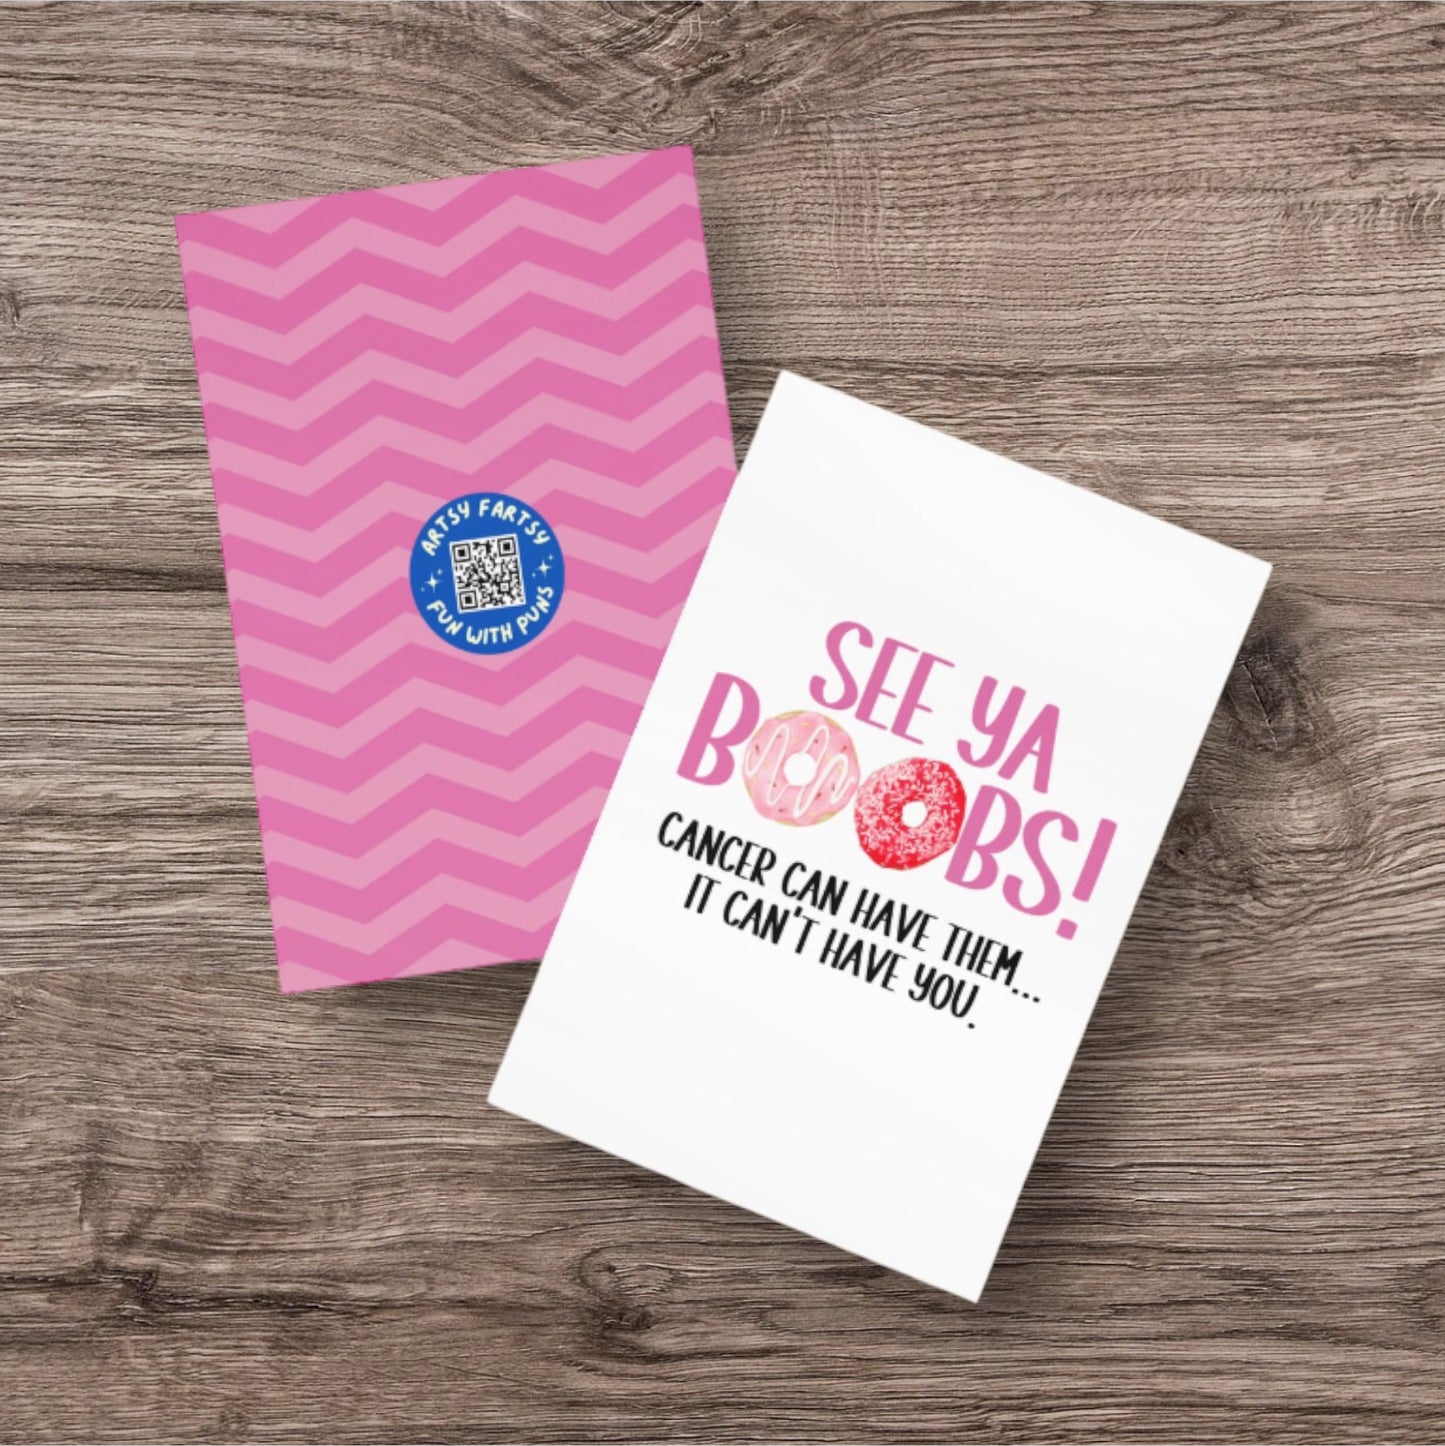 See Ya Boobs Breast Cancer Card | Breast Cancer Survivor Card